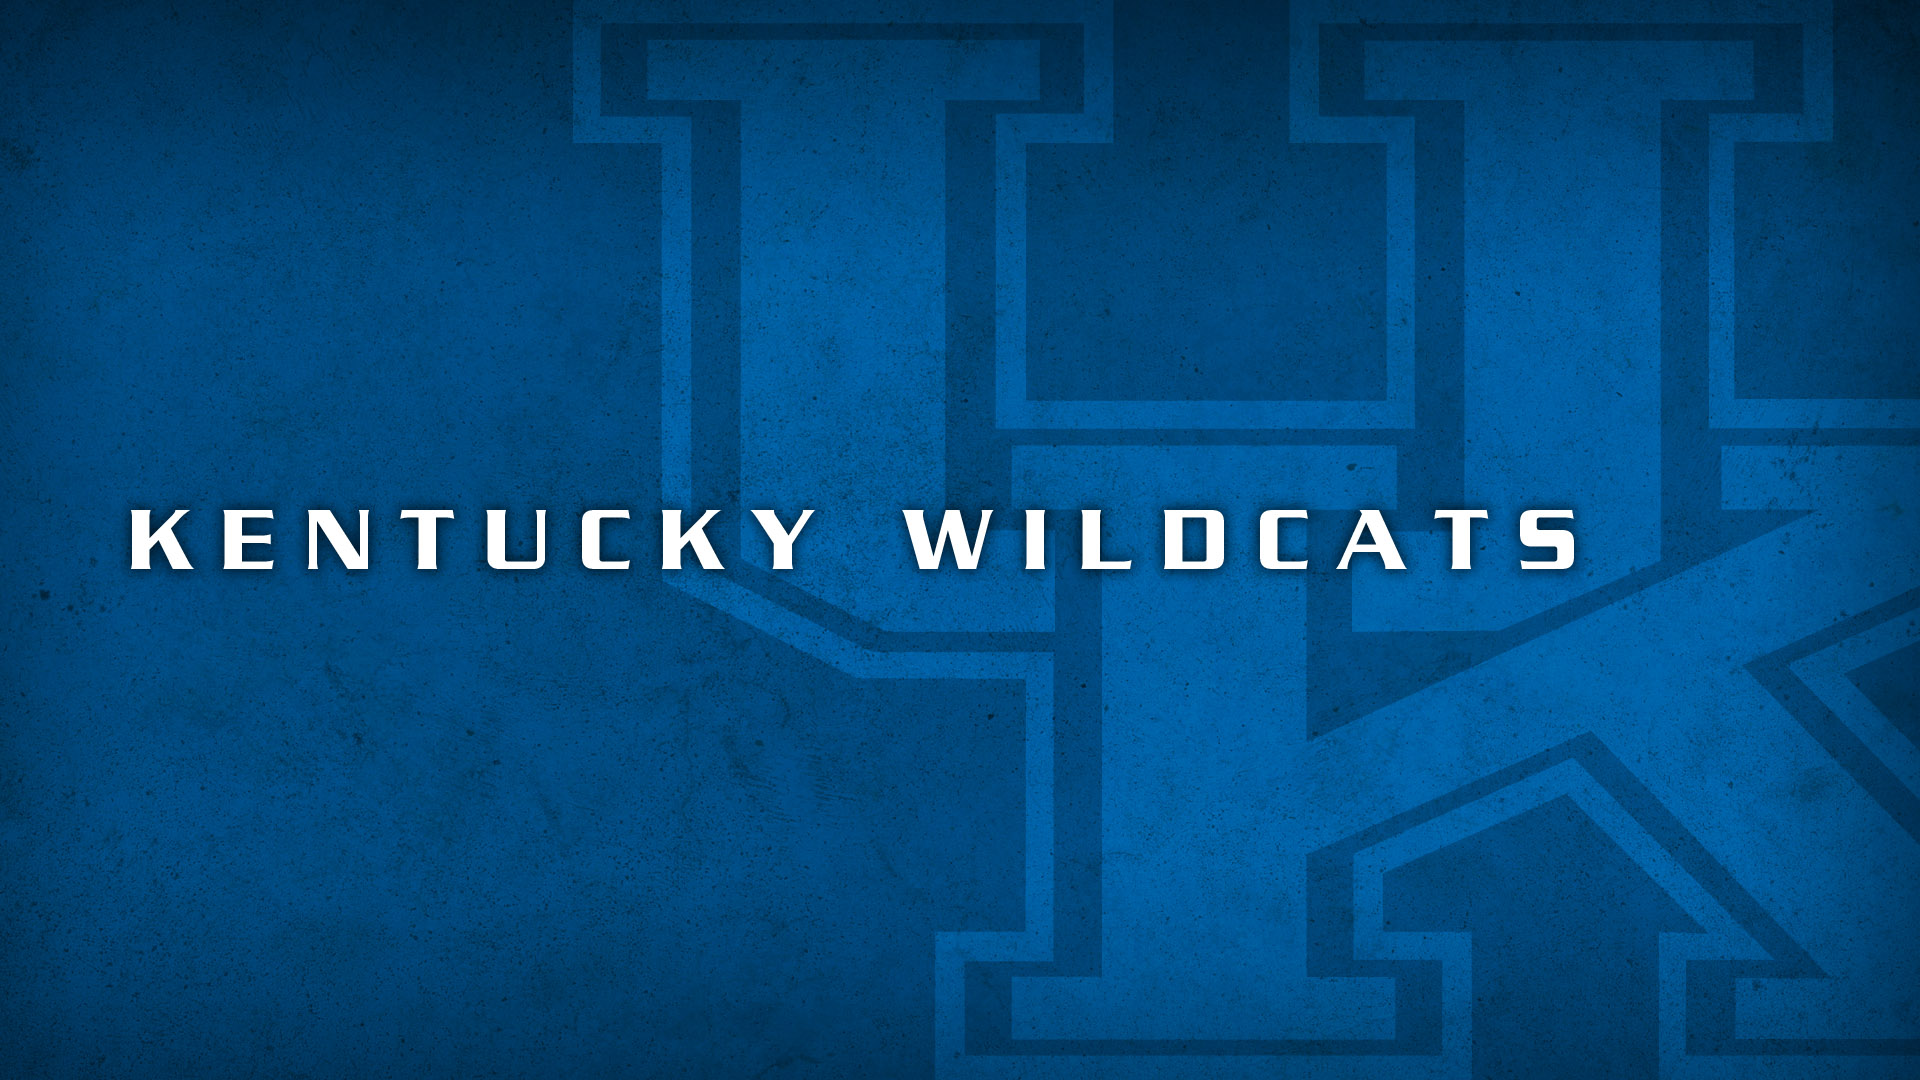 New University of Kentucky HD Wallpapers